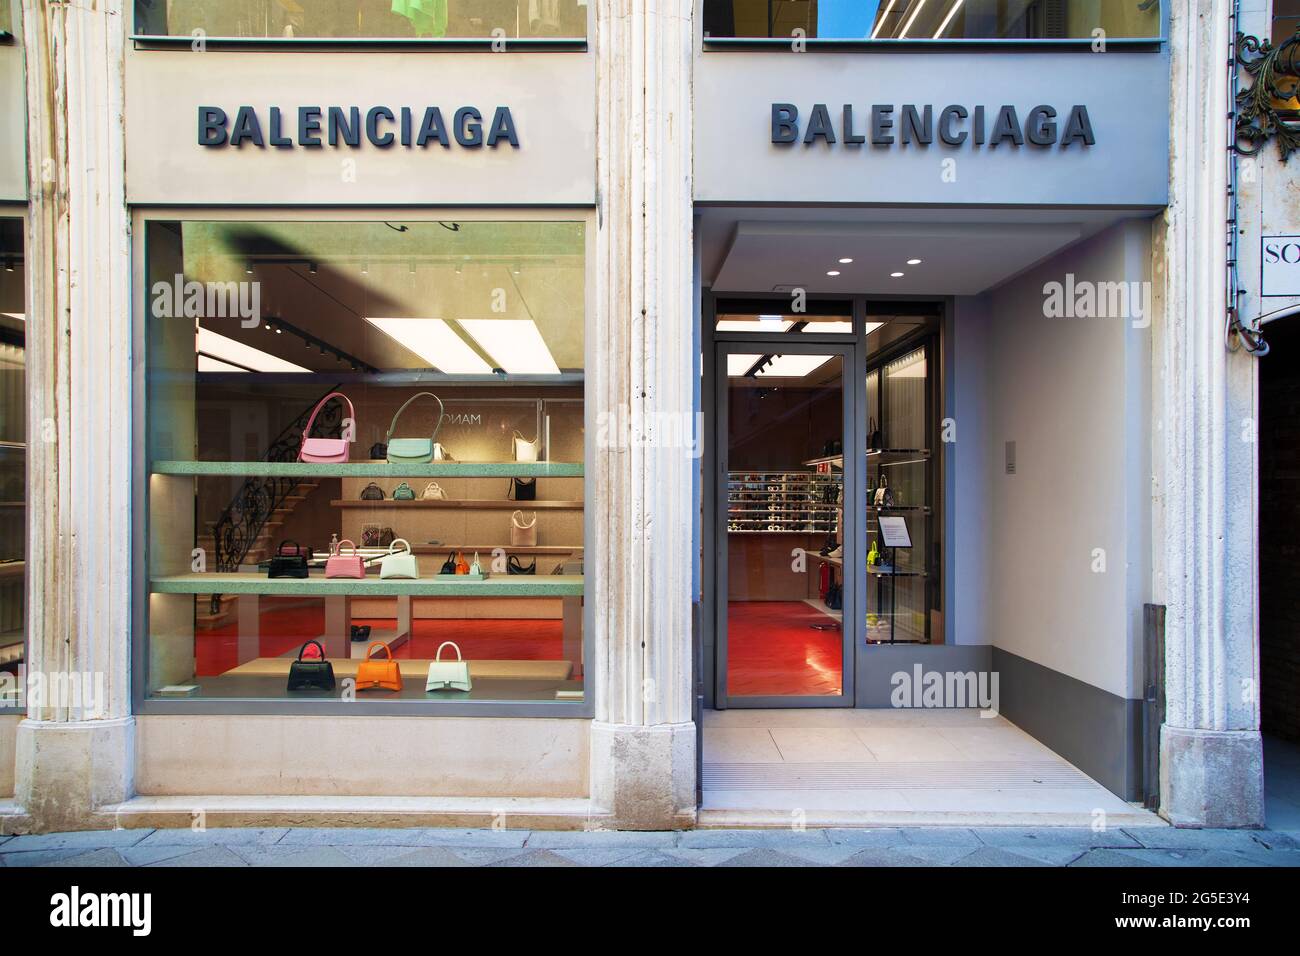 Balenciaga a Venezia Foto stock - Alamy